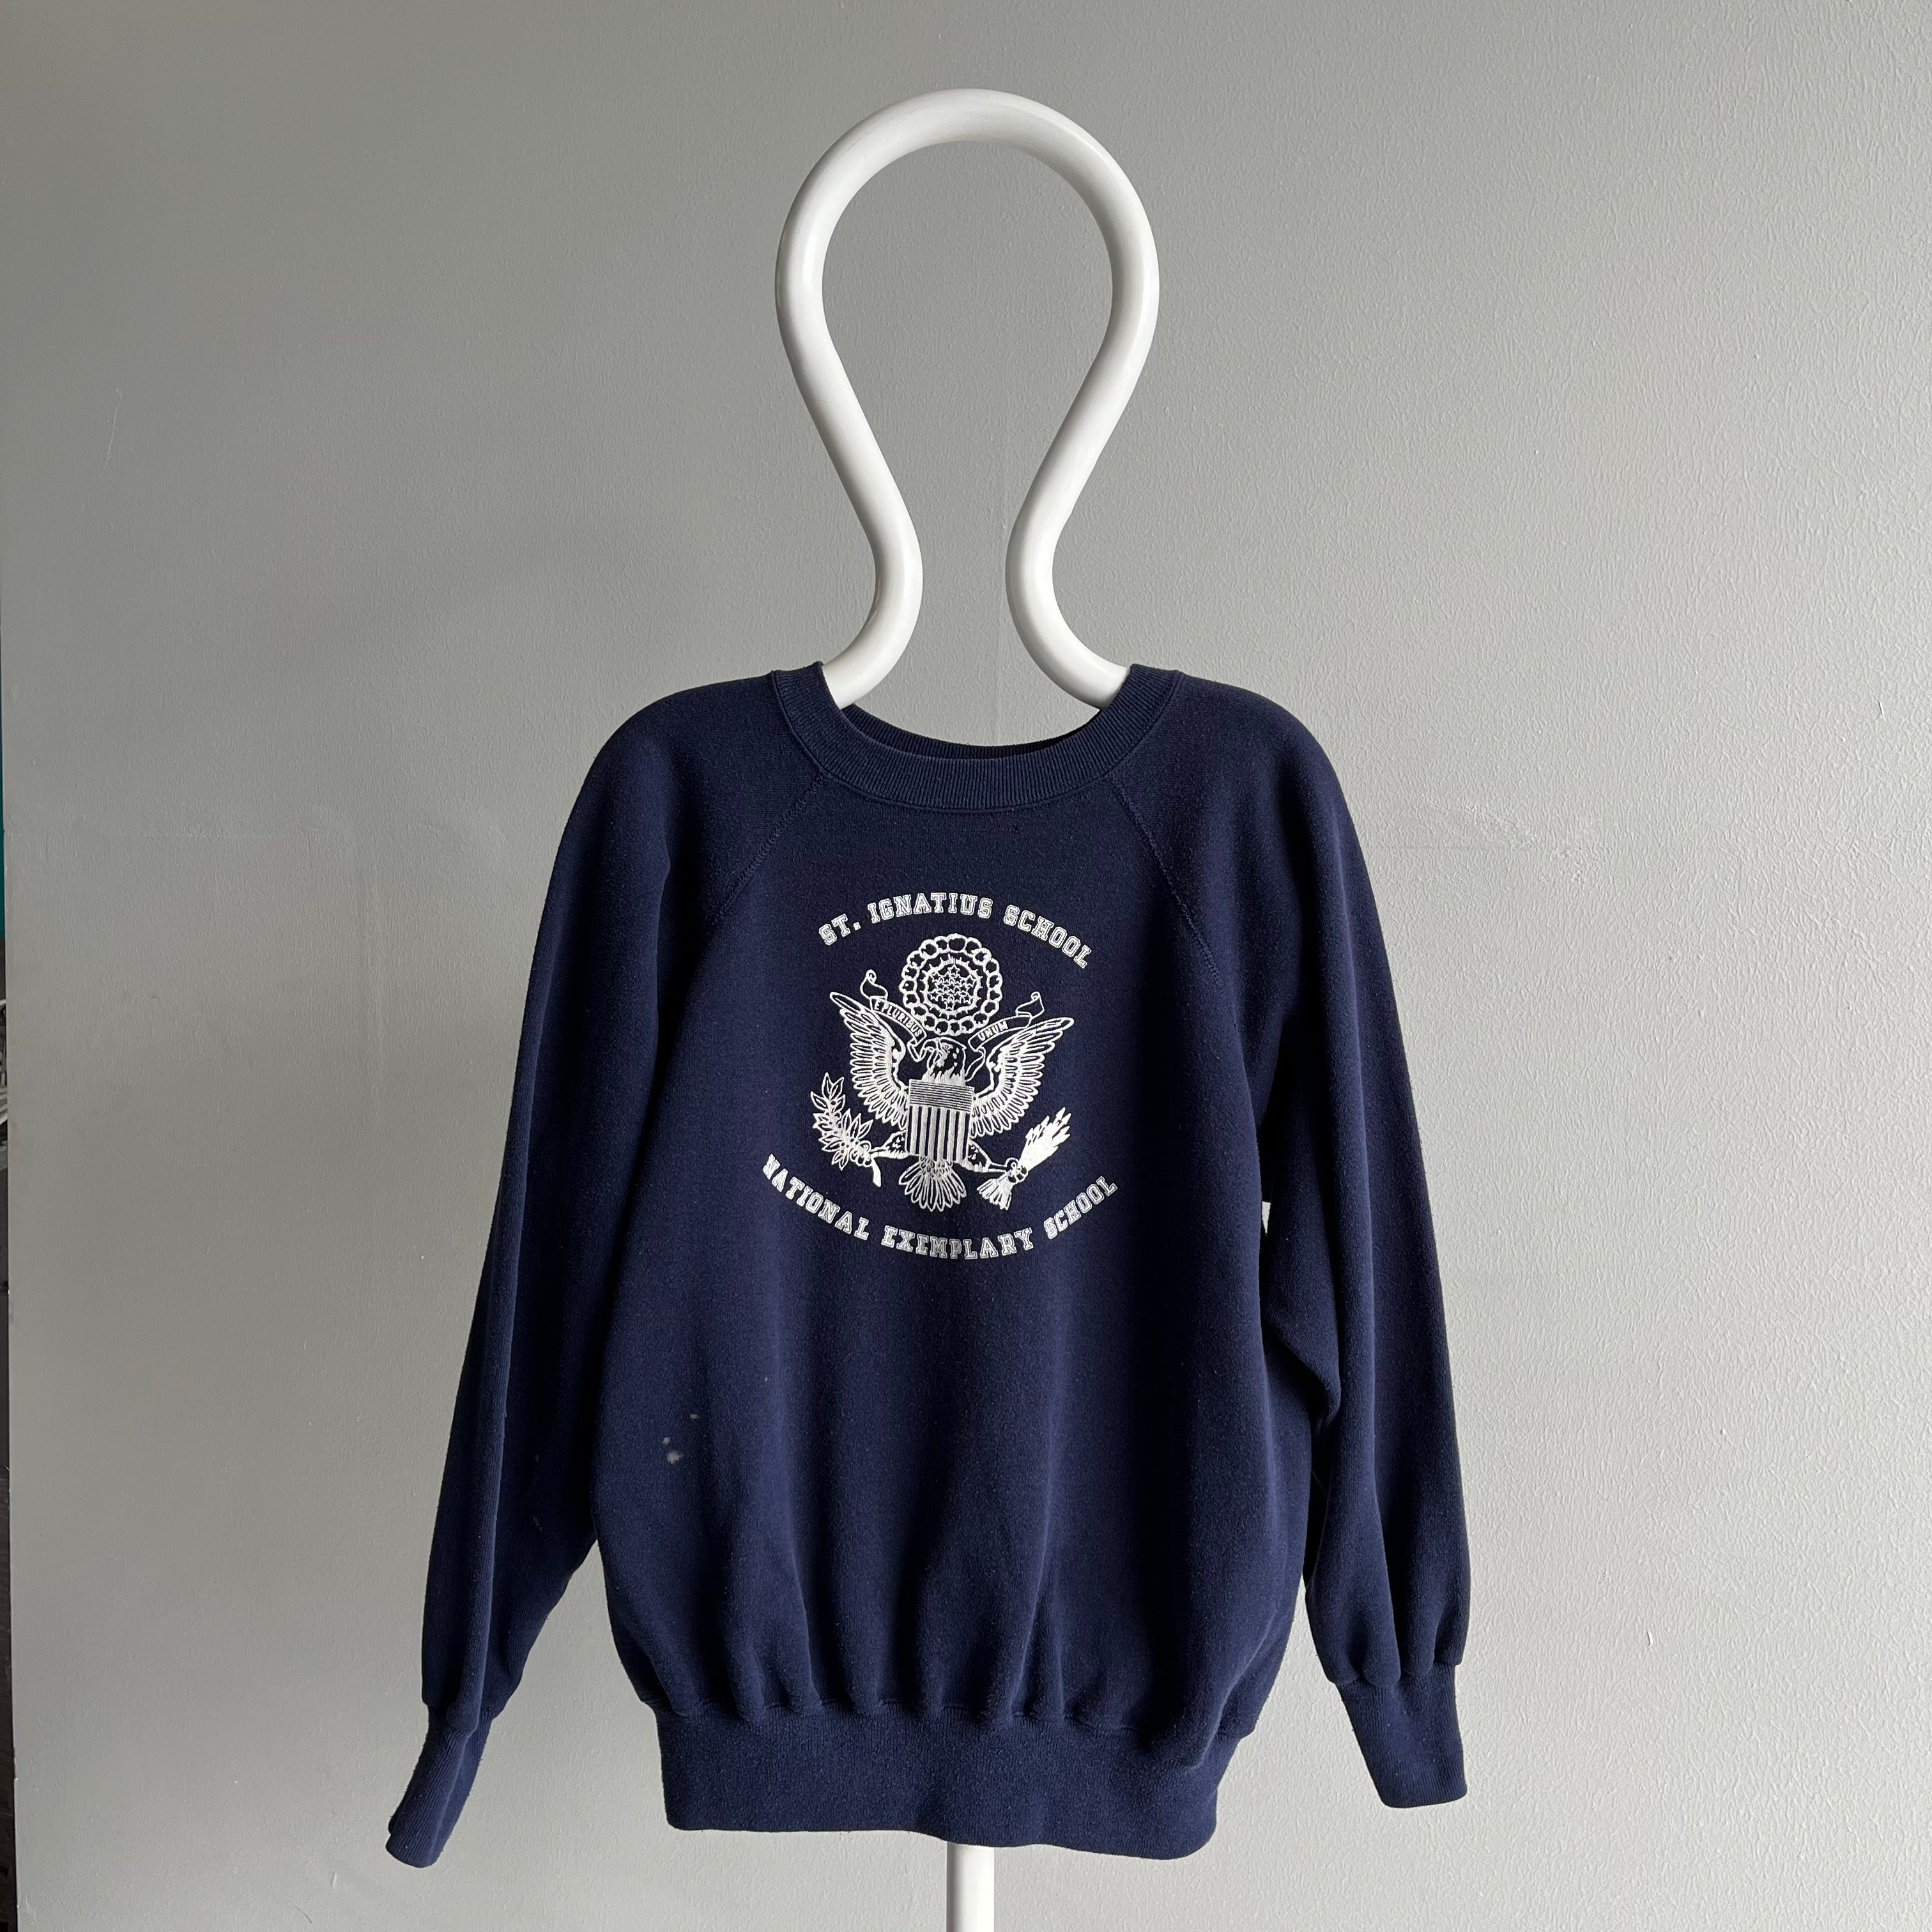 1980/90s St. Ignatius School Sweatshirt